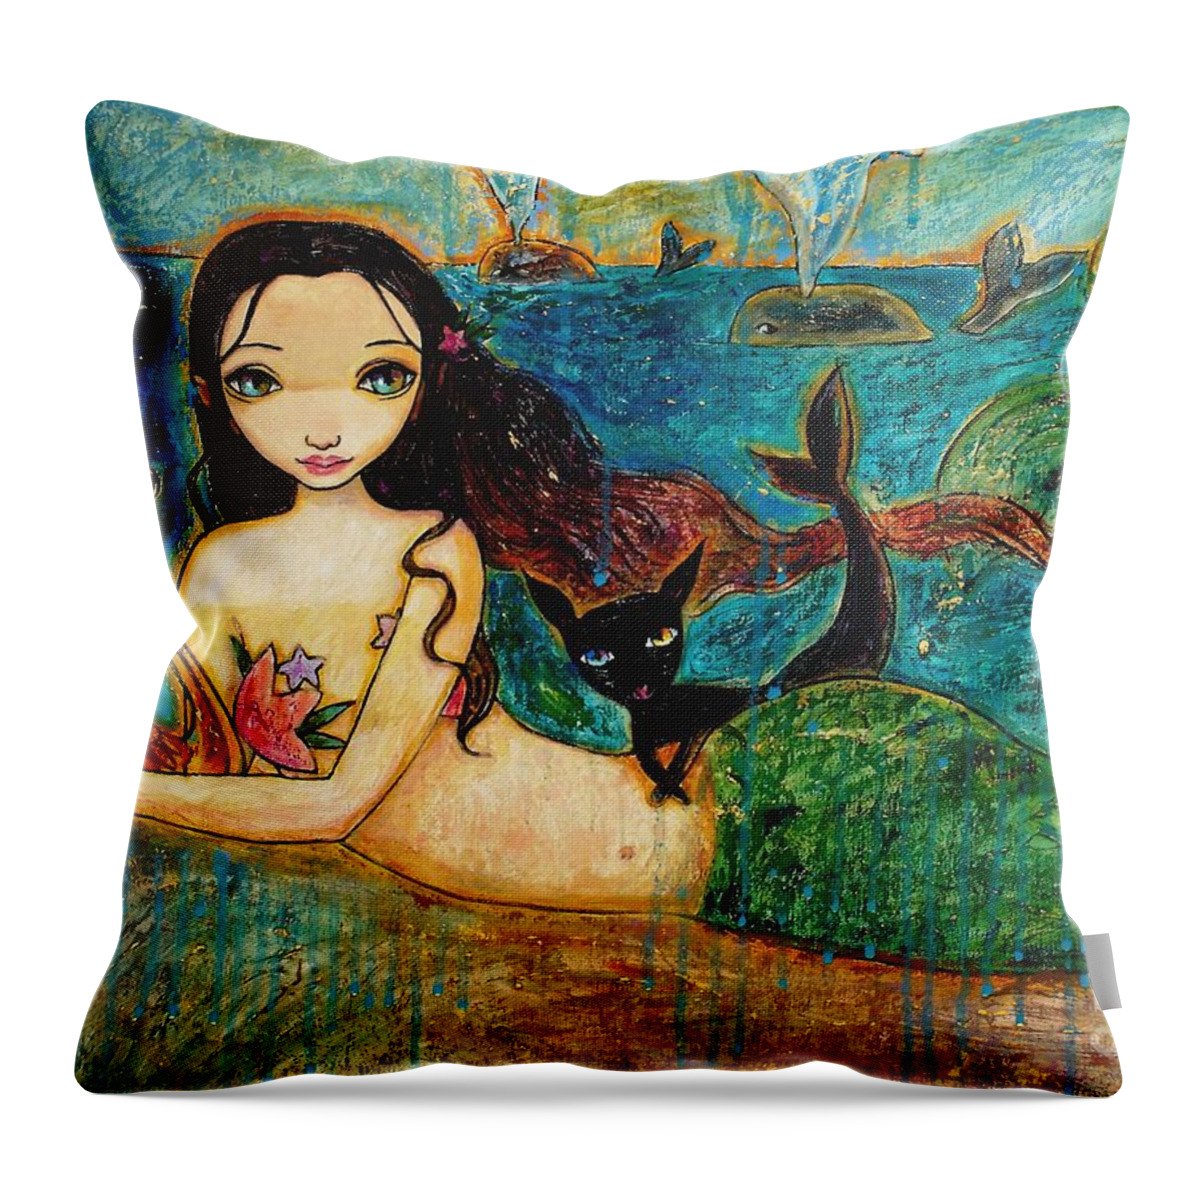 Mermaid Art Throw Pillow featuring the painting Little Mermaid by Shijun Munns